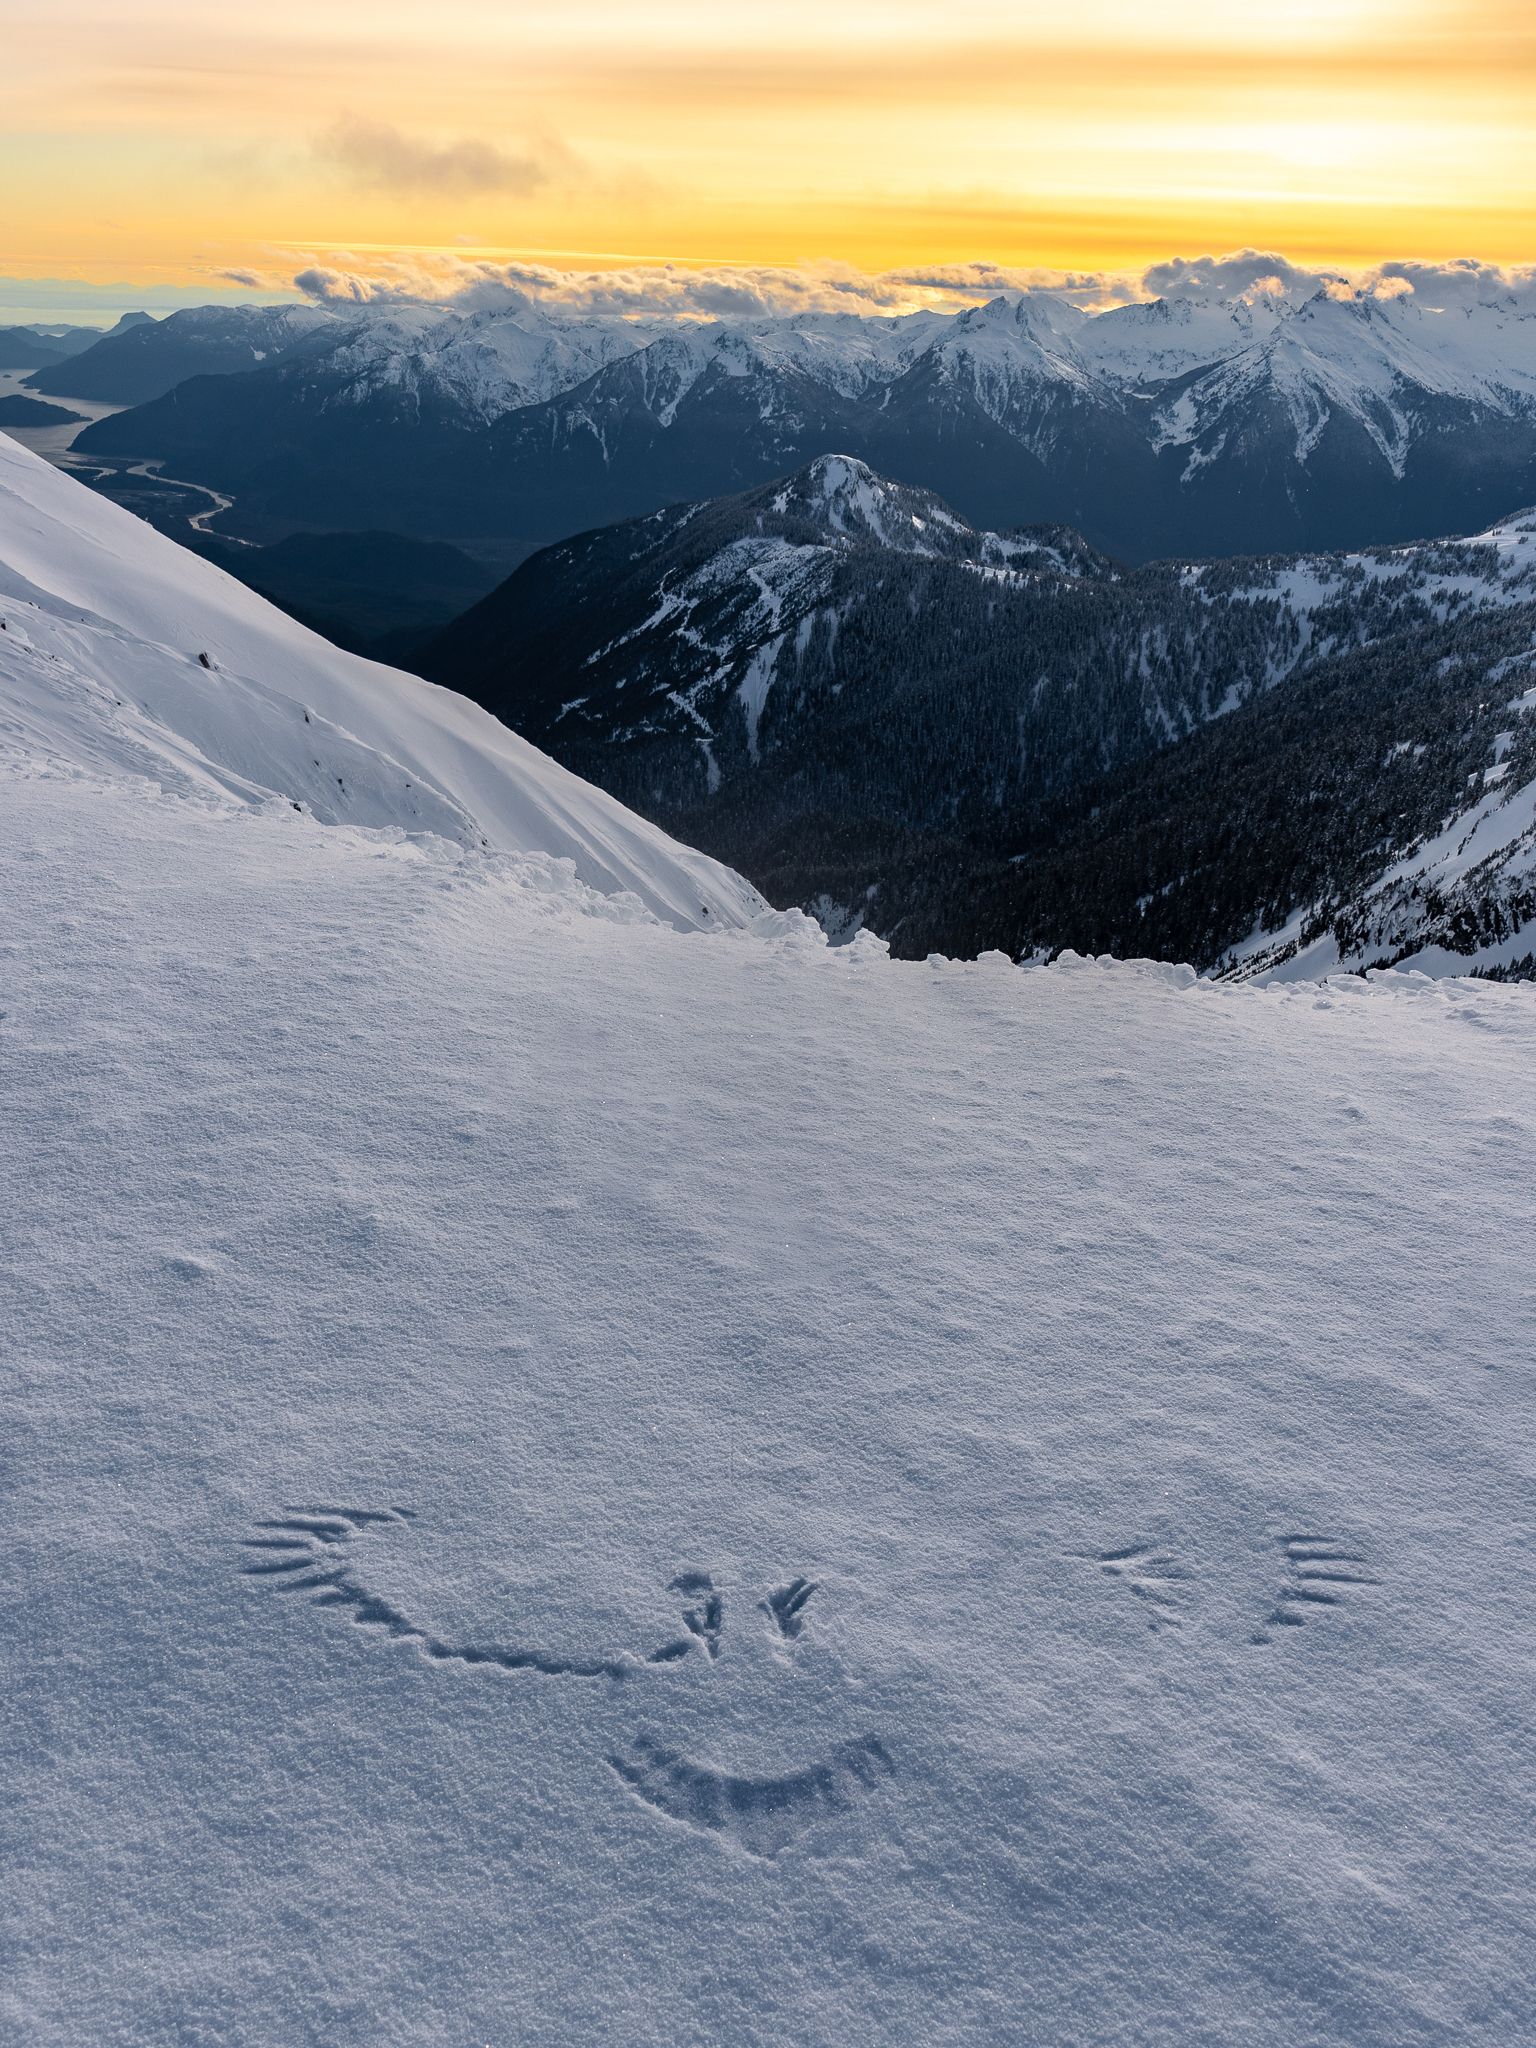 Snowy bird imprint near Squamish, BC